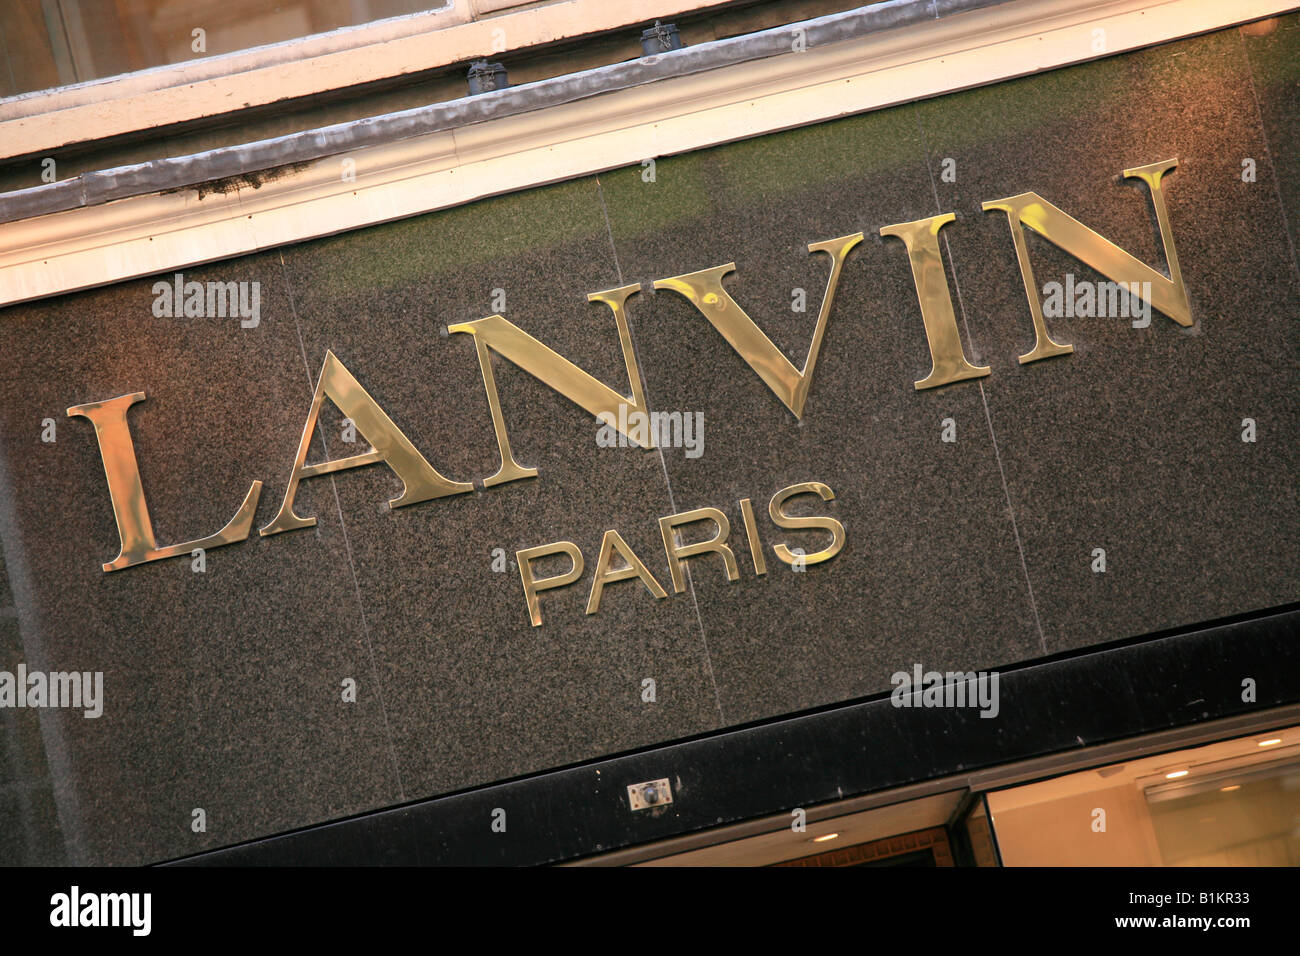 Lanvin store, London Stock Photo - Alamy